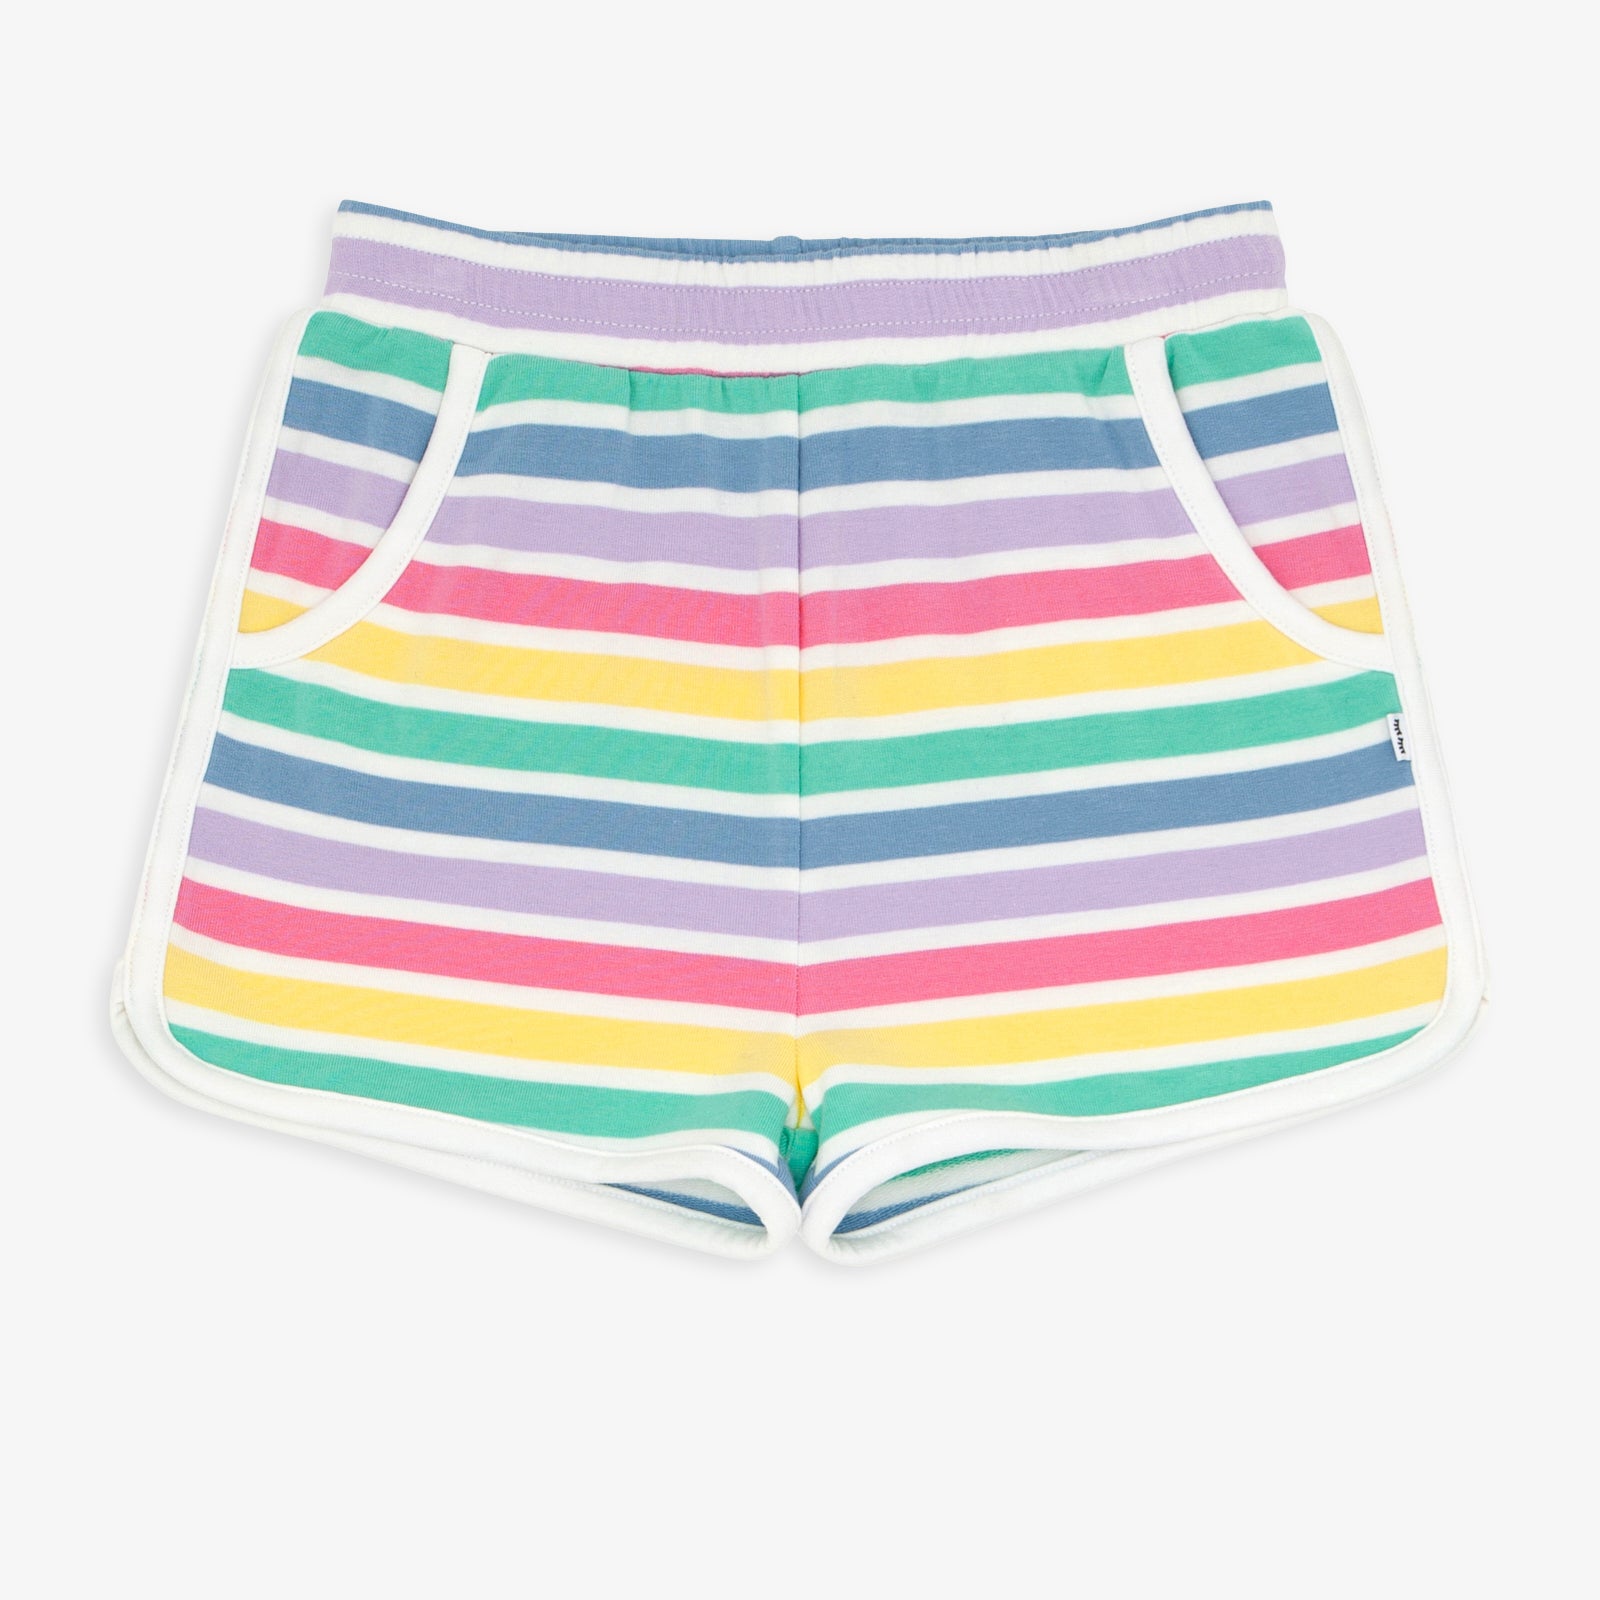 Flat lay image of the Rainbow Stripes Dolphin Shorts